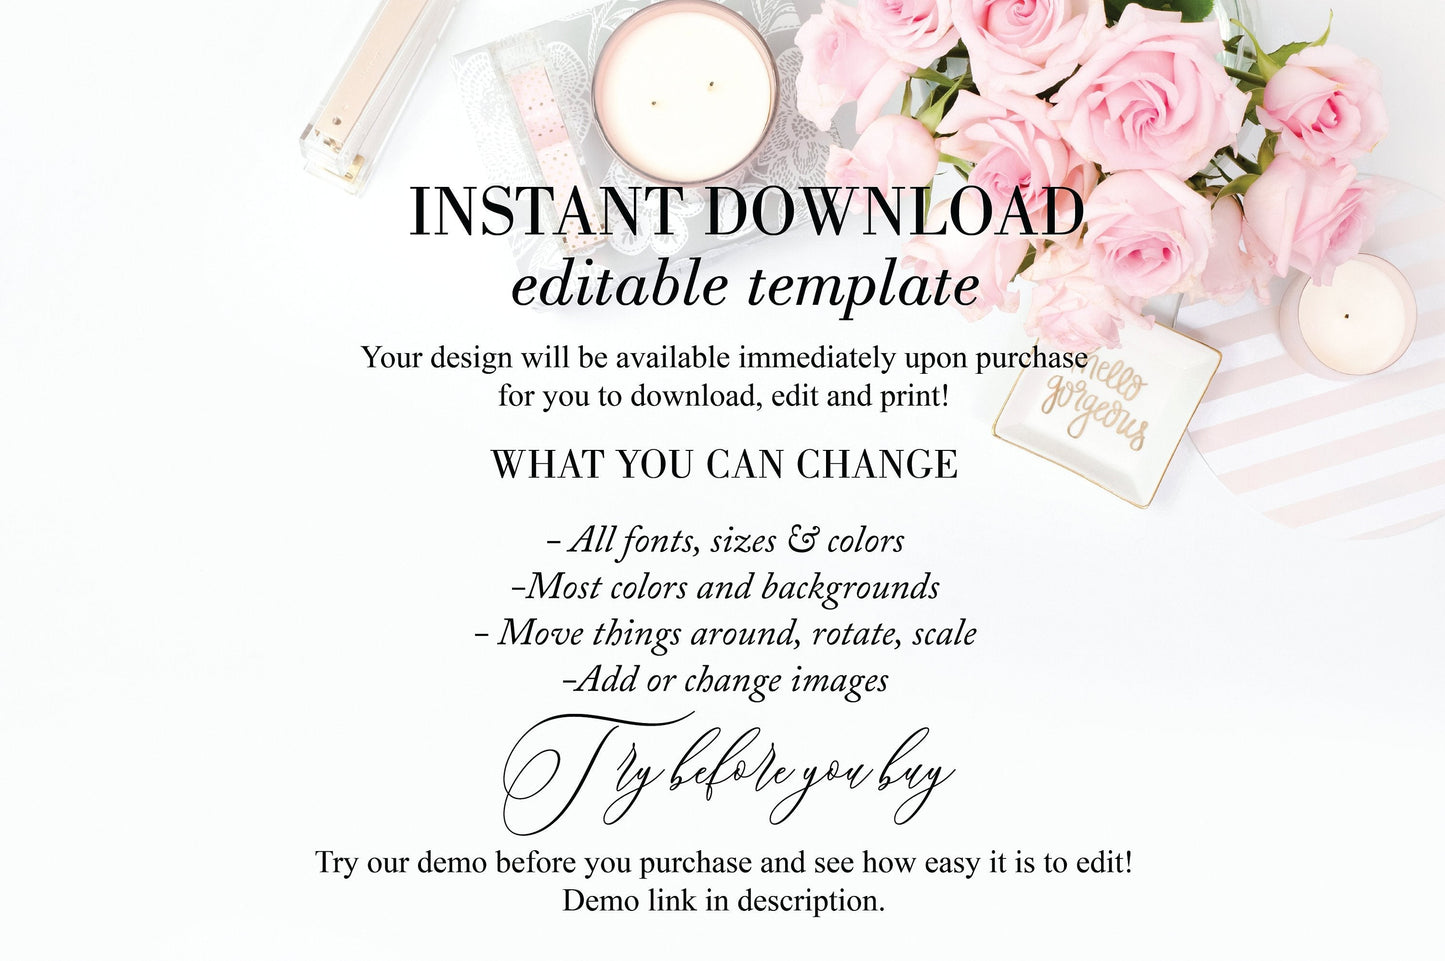 Printable Wedding Invitation, Editable Invite Editable text Greenery Wedding Templett- ANNA WEDDING INVITATIONS SAVVY PAPER CO